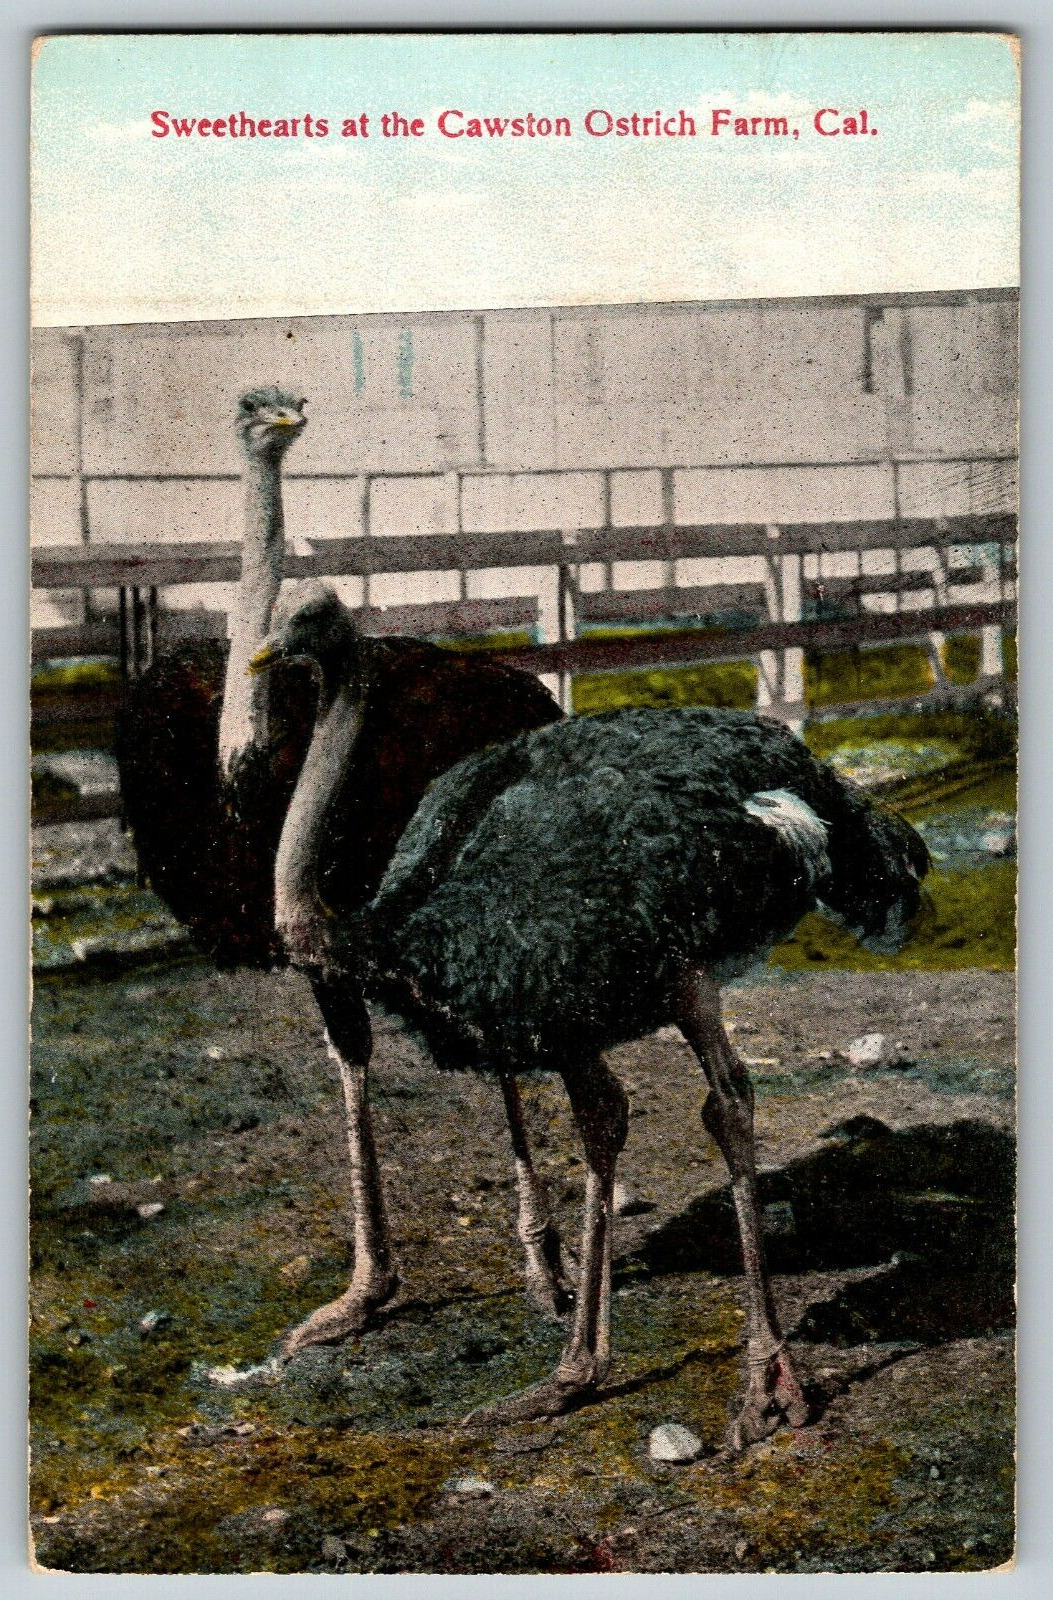 Sweethearts at the Cawston Ostrich Farm, California  - Vintage Postcard